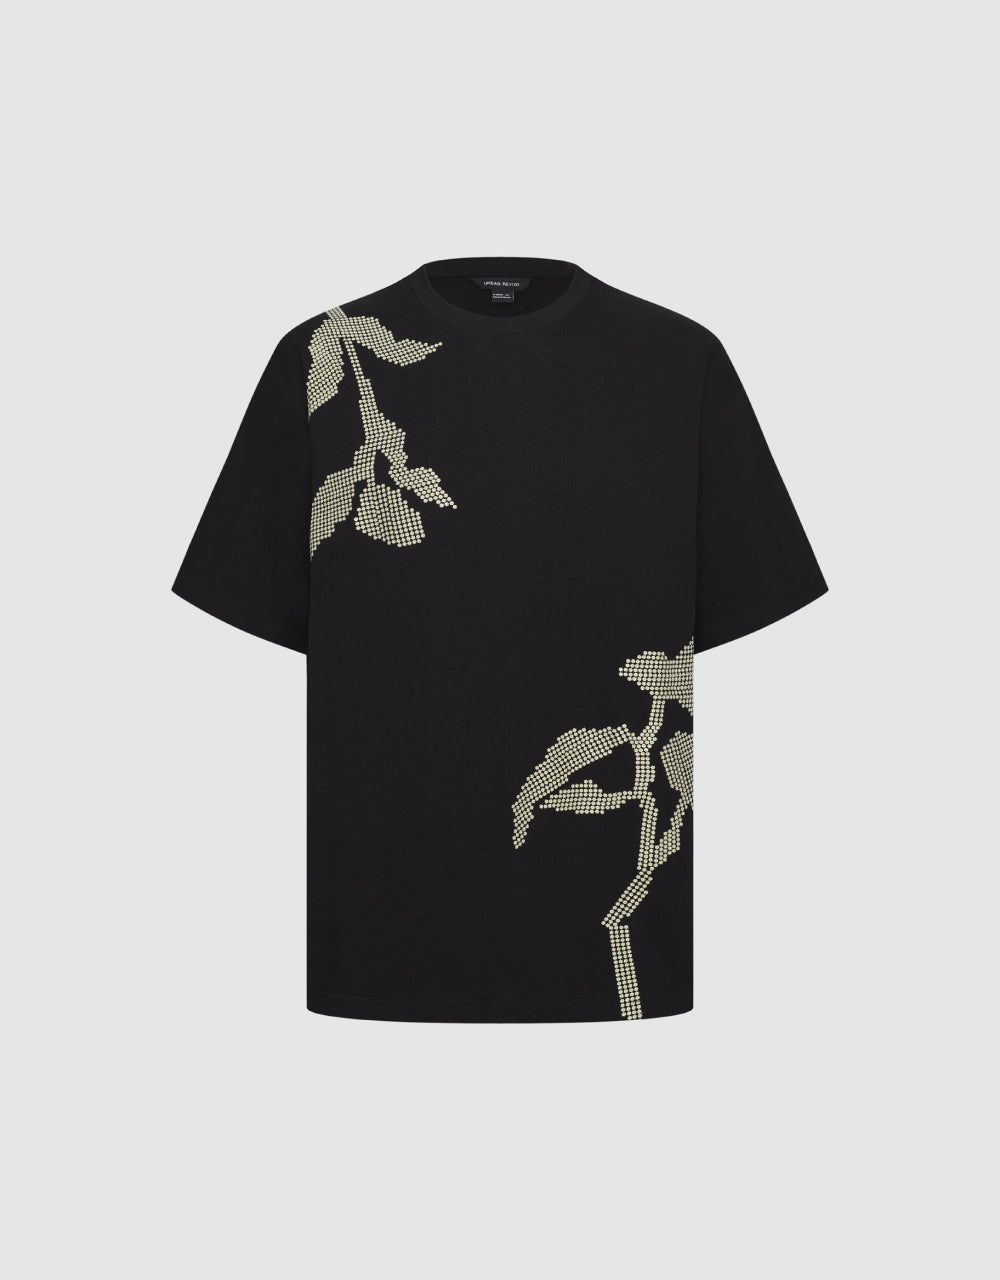 Urban Revivo Fashion Flower Printed Crew Neck T-Shirt, Black / Xs